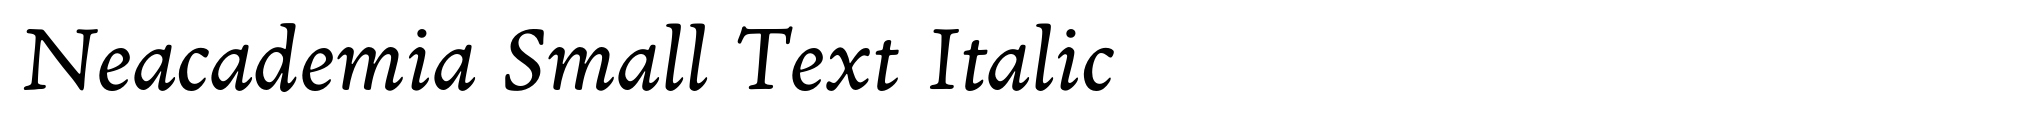 Neacademia Small Text Italic image